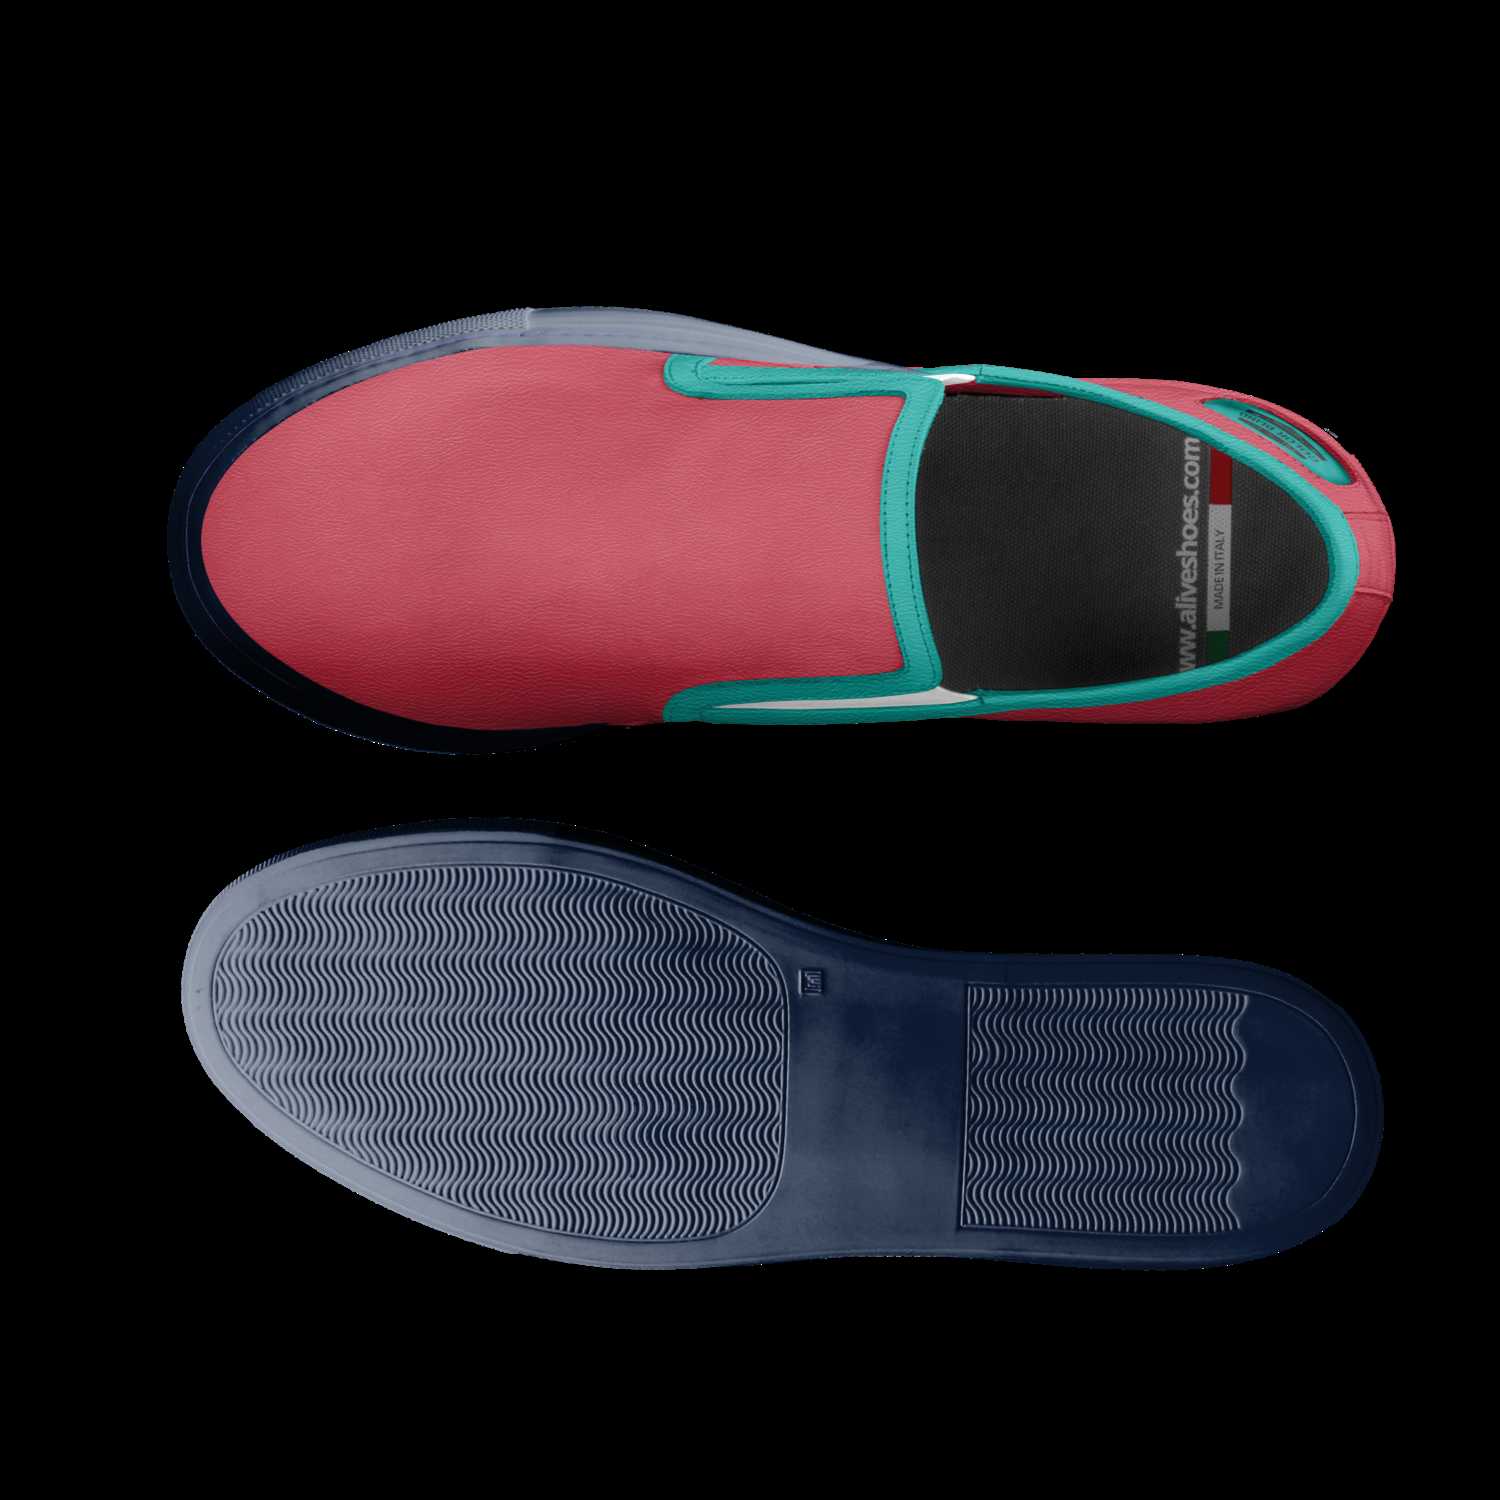 Ultrasonic shoe sensors help the visually impaired - EDN